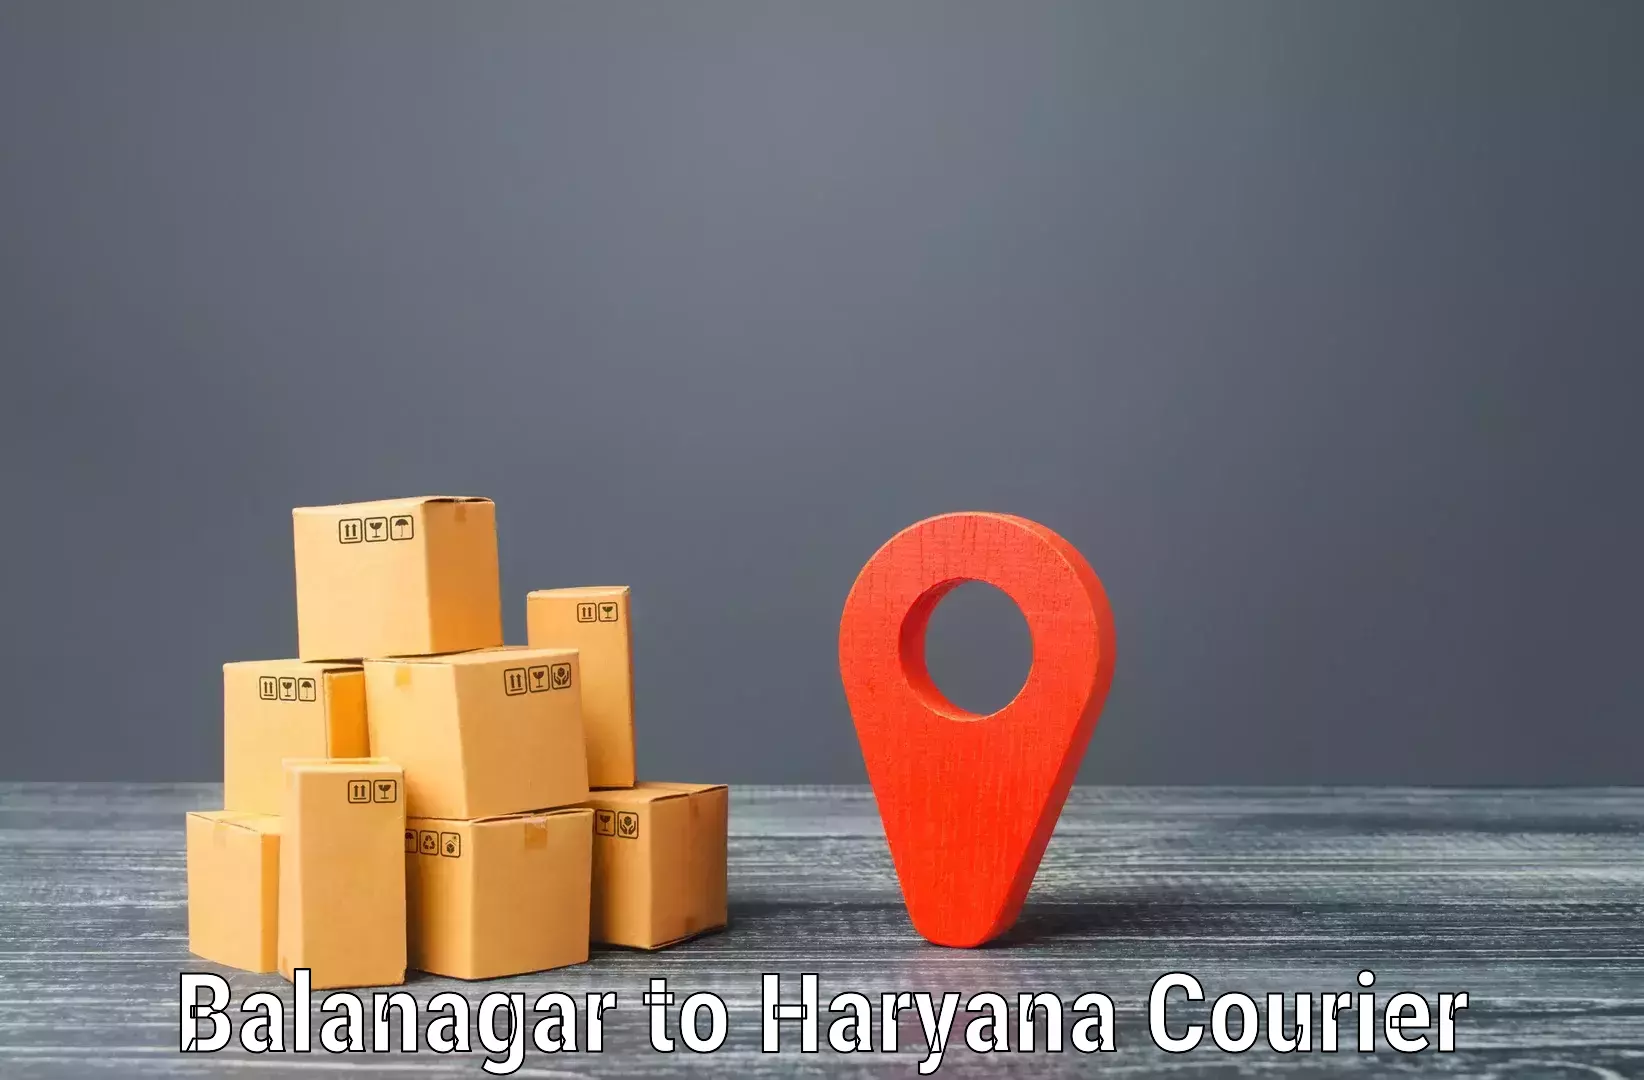 Smart shipping technology Balanagar to Bhiwani